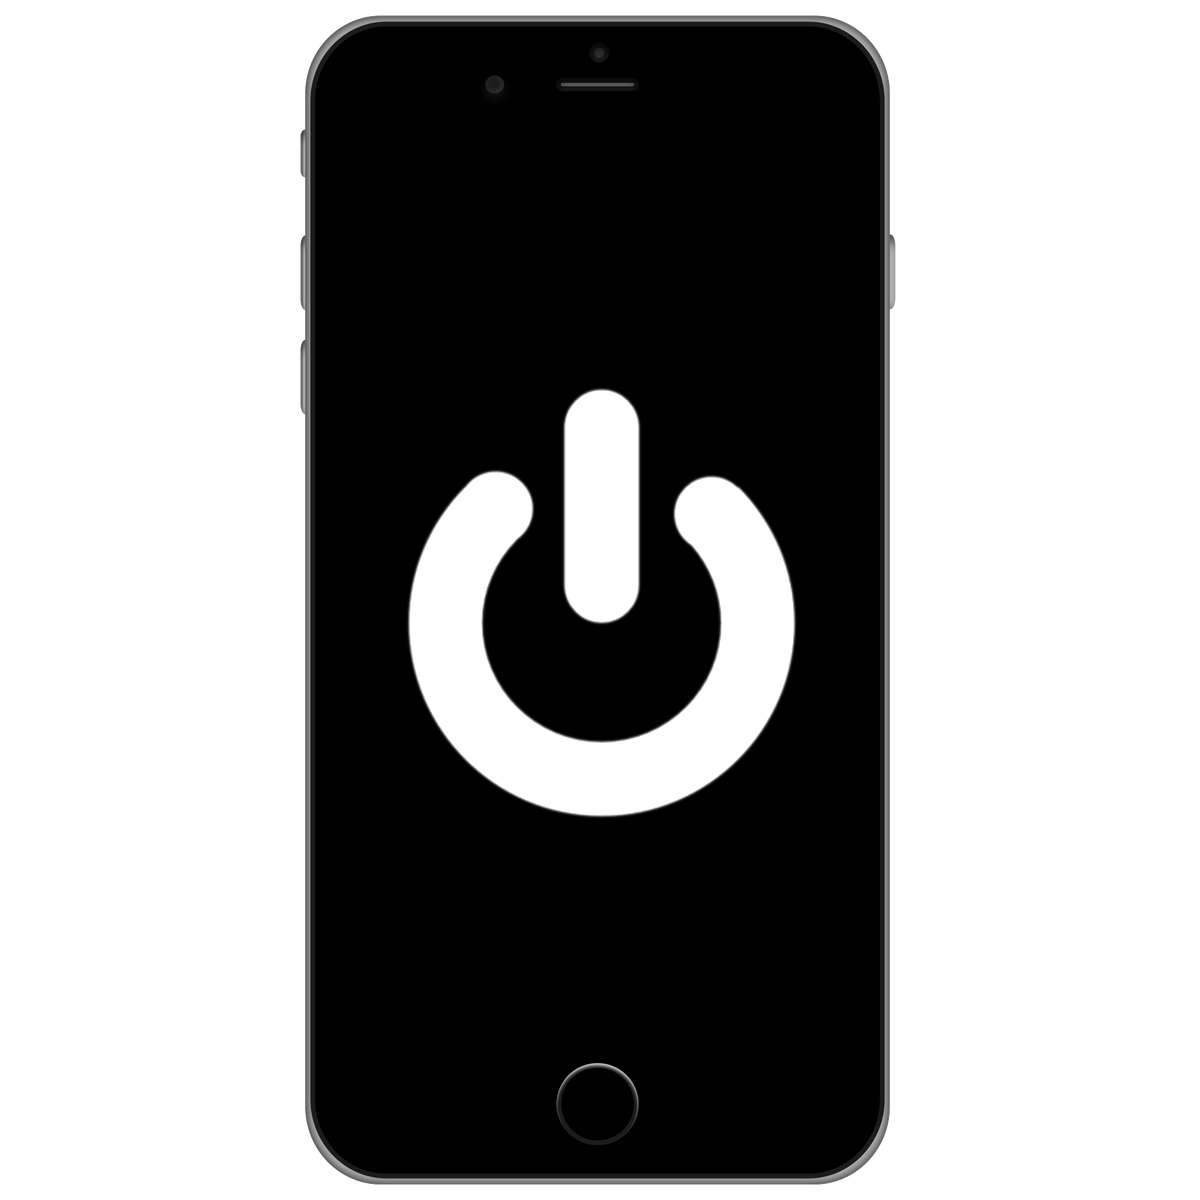 iPhone 11 Power Button Repair - TechPros